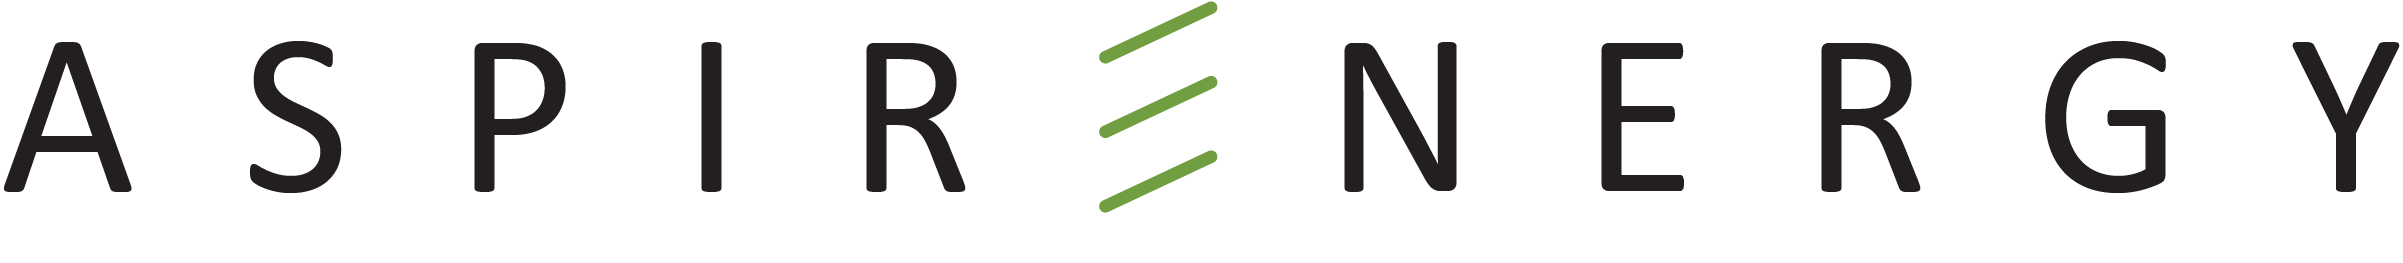 AspirEnergy Logo